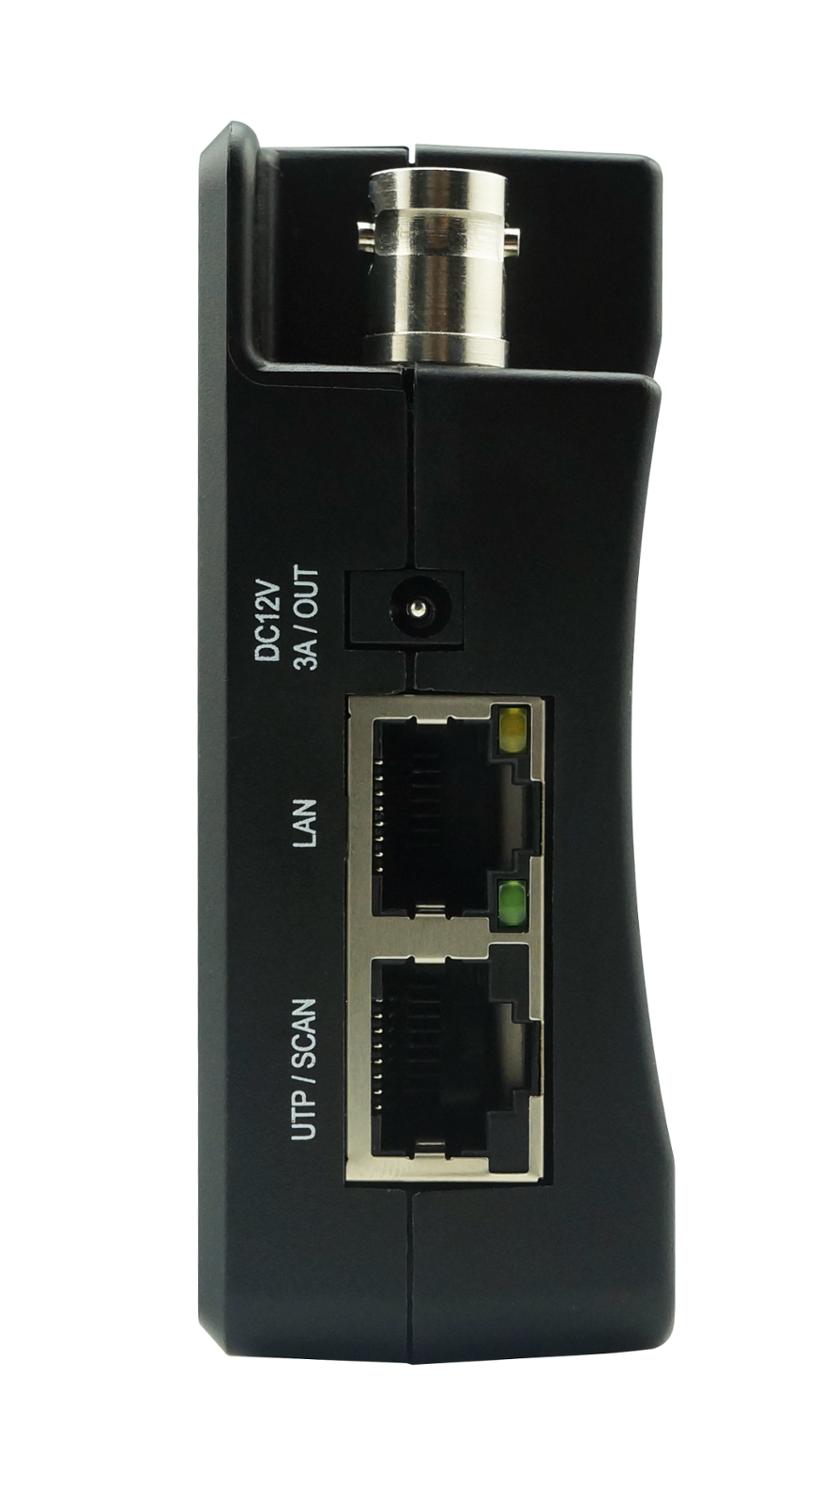 IPC-1800SN 4inch 4K H265 IP Camera tester 8MP AHD TVI CVI CVBS CCTV Tester Monitor with PTZ Control Rapid ONVIF IPC Tester POE